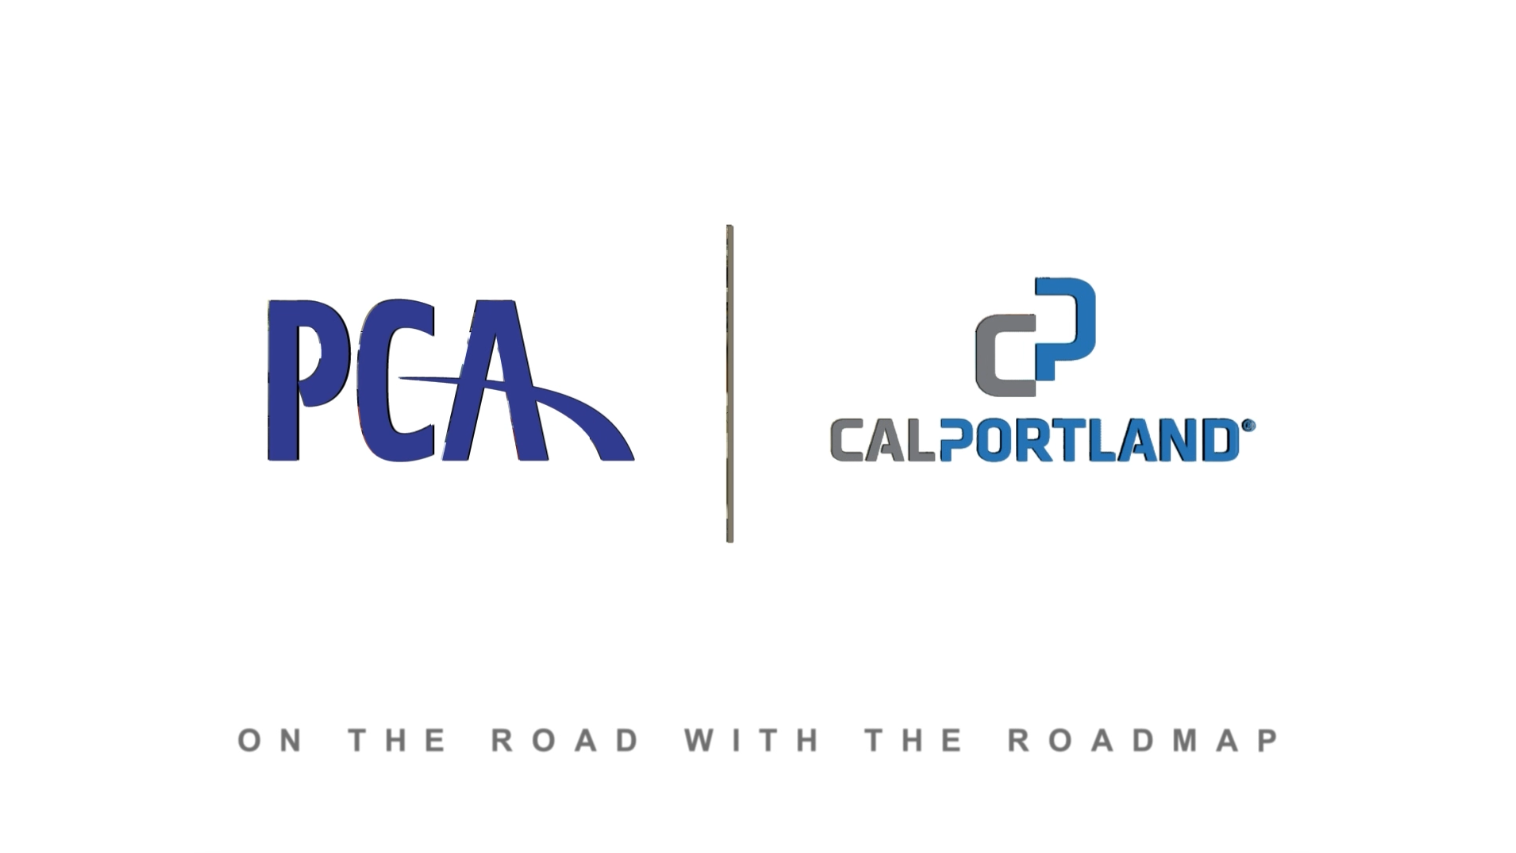 Allen Hamblin and Steve Regis of CalPortland – On the Road with the Roadmap